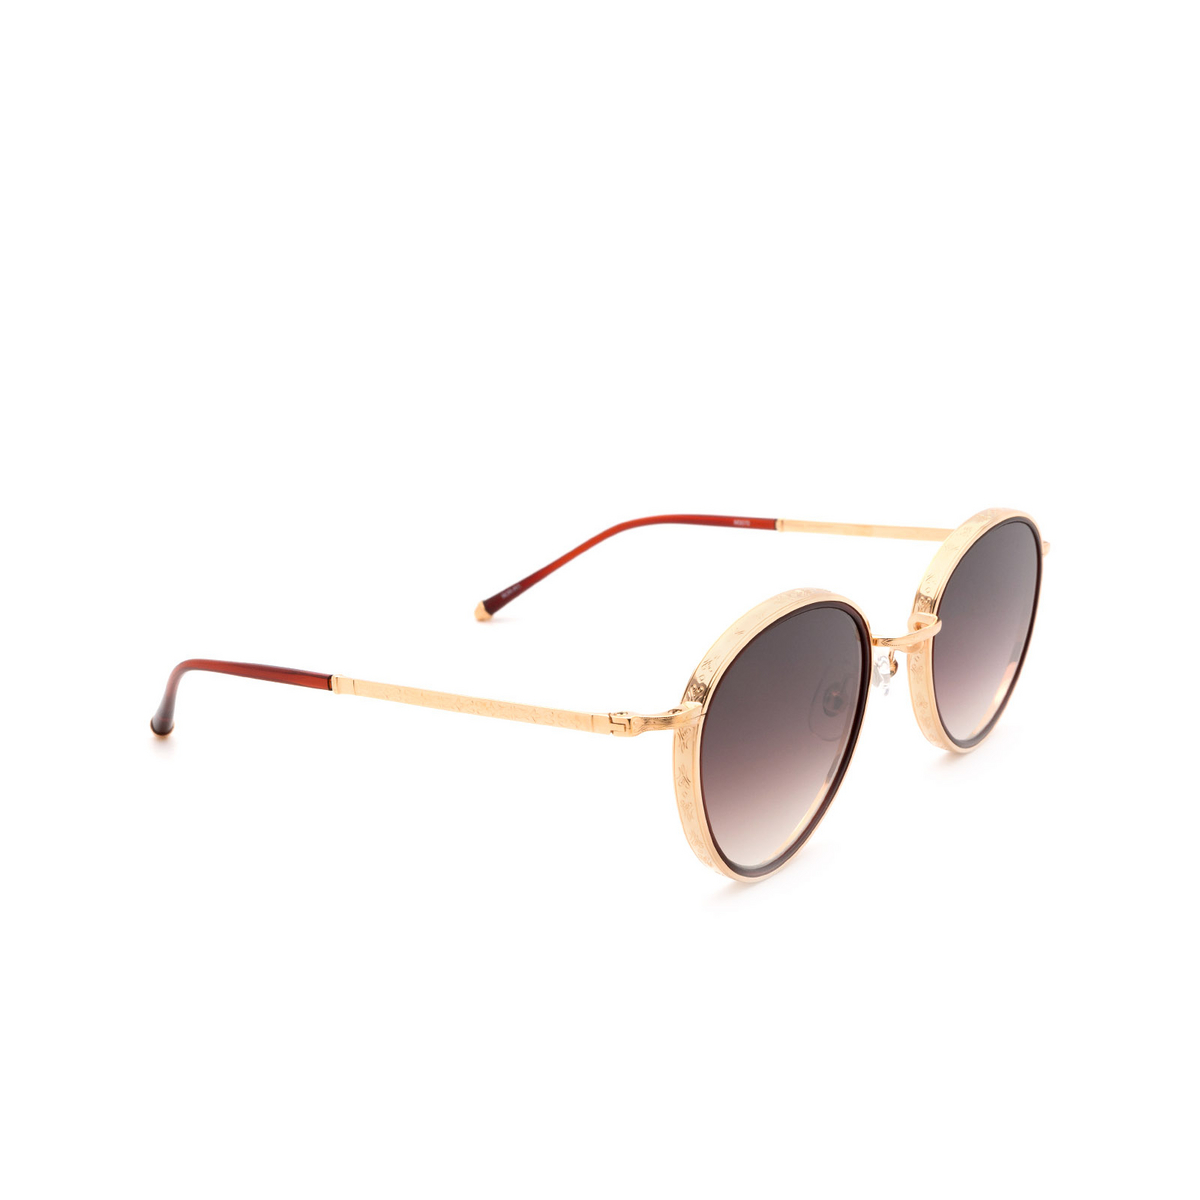 Matsuda® Round Sunglasses: M3070 color Bordeaux / Rose Gold Bor-rg - three-quarters view.